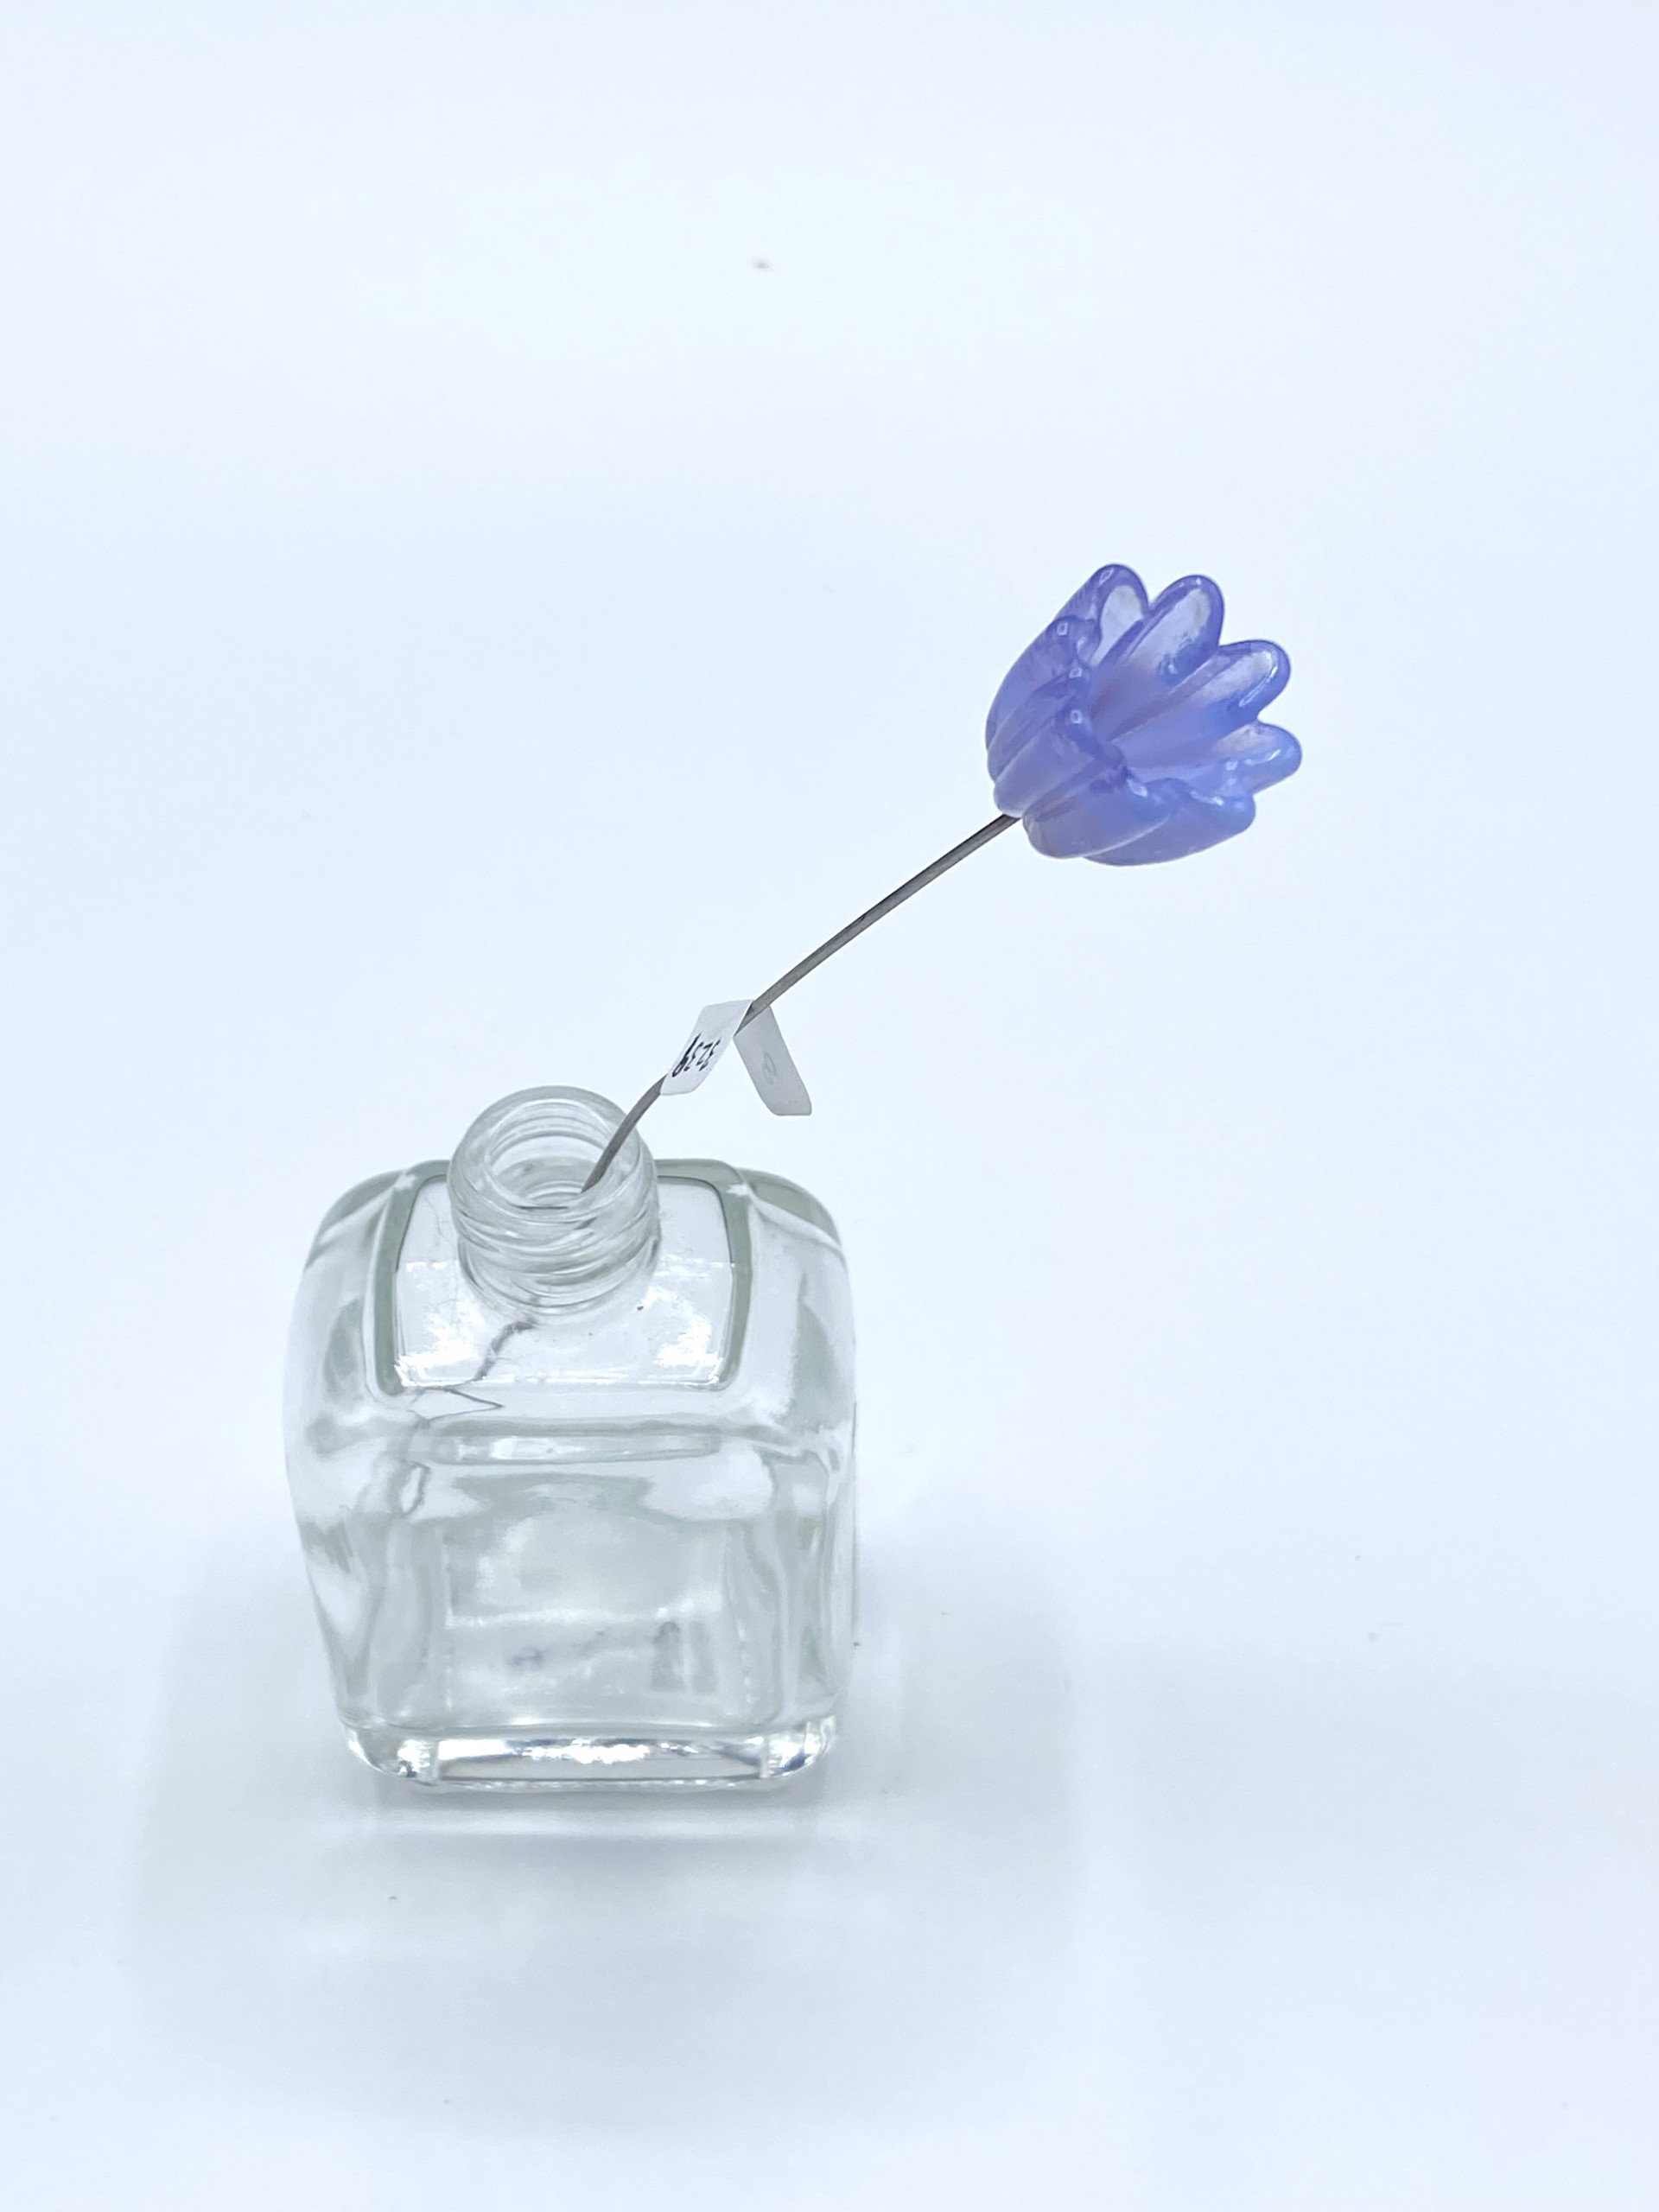 Lavender Bell Flower by Emelie Hebert